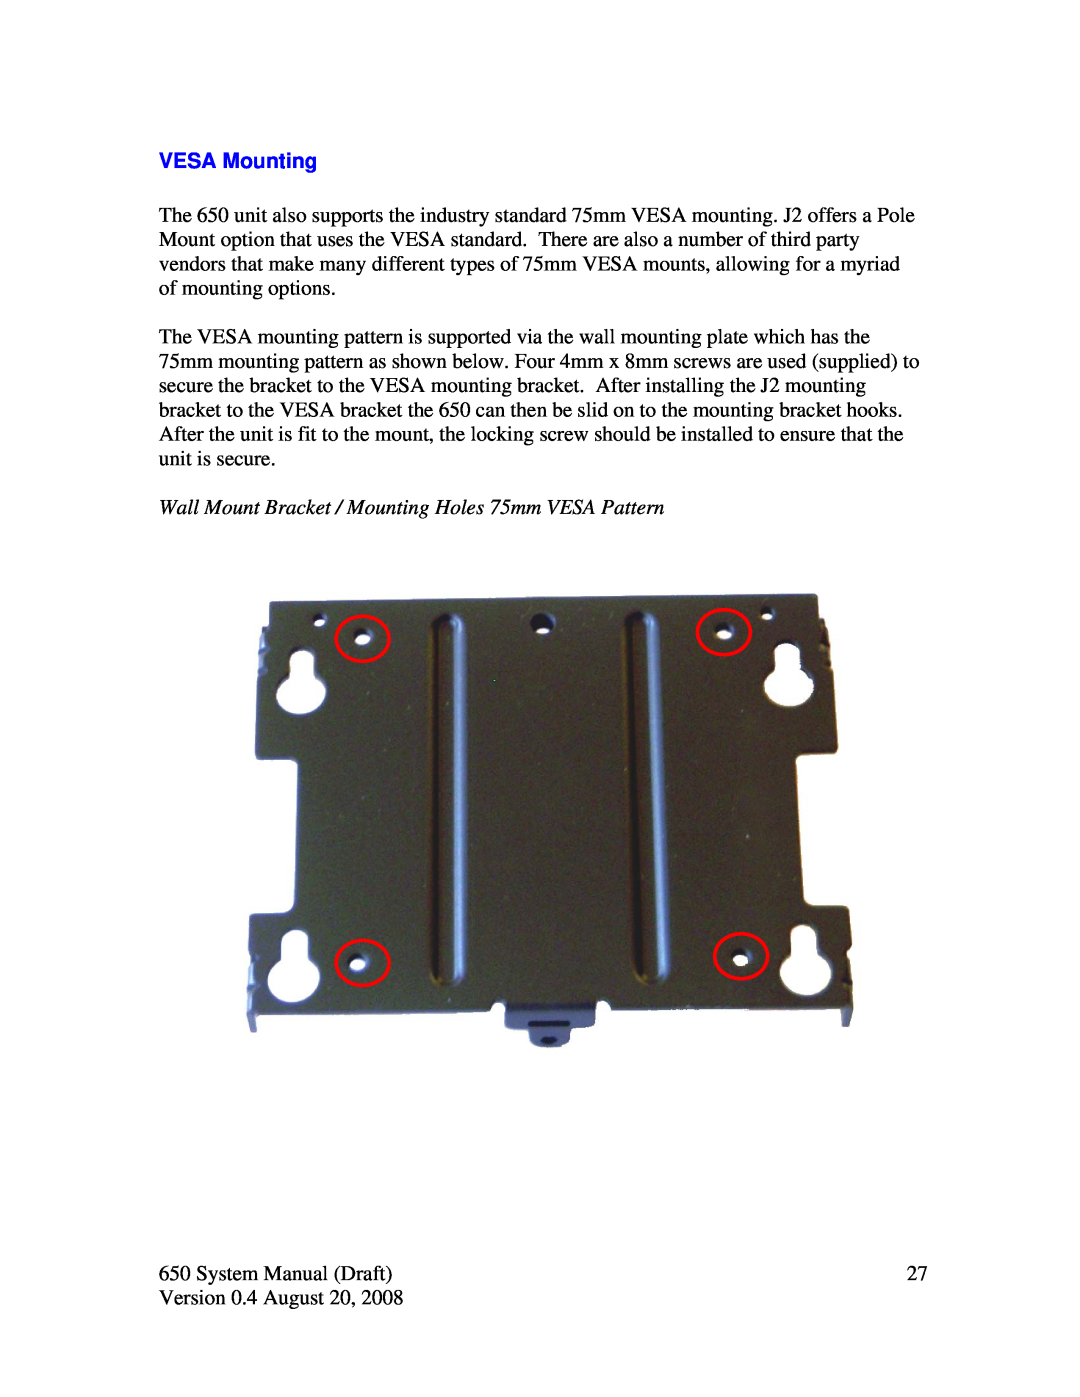 Intel J2 650 system manual VESA Mounting, Wall Mount Bracket / Mounting Holes 75mm VESA Pattern 